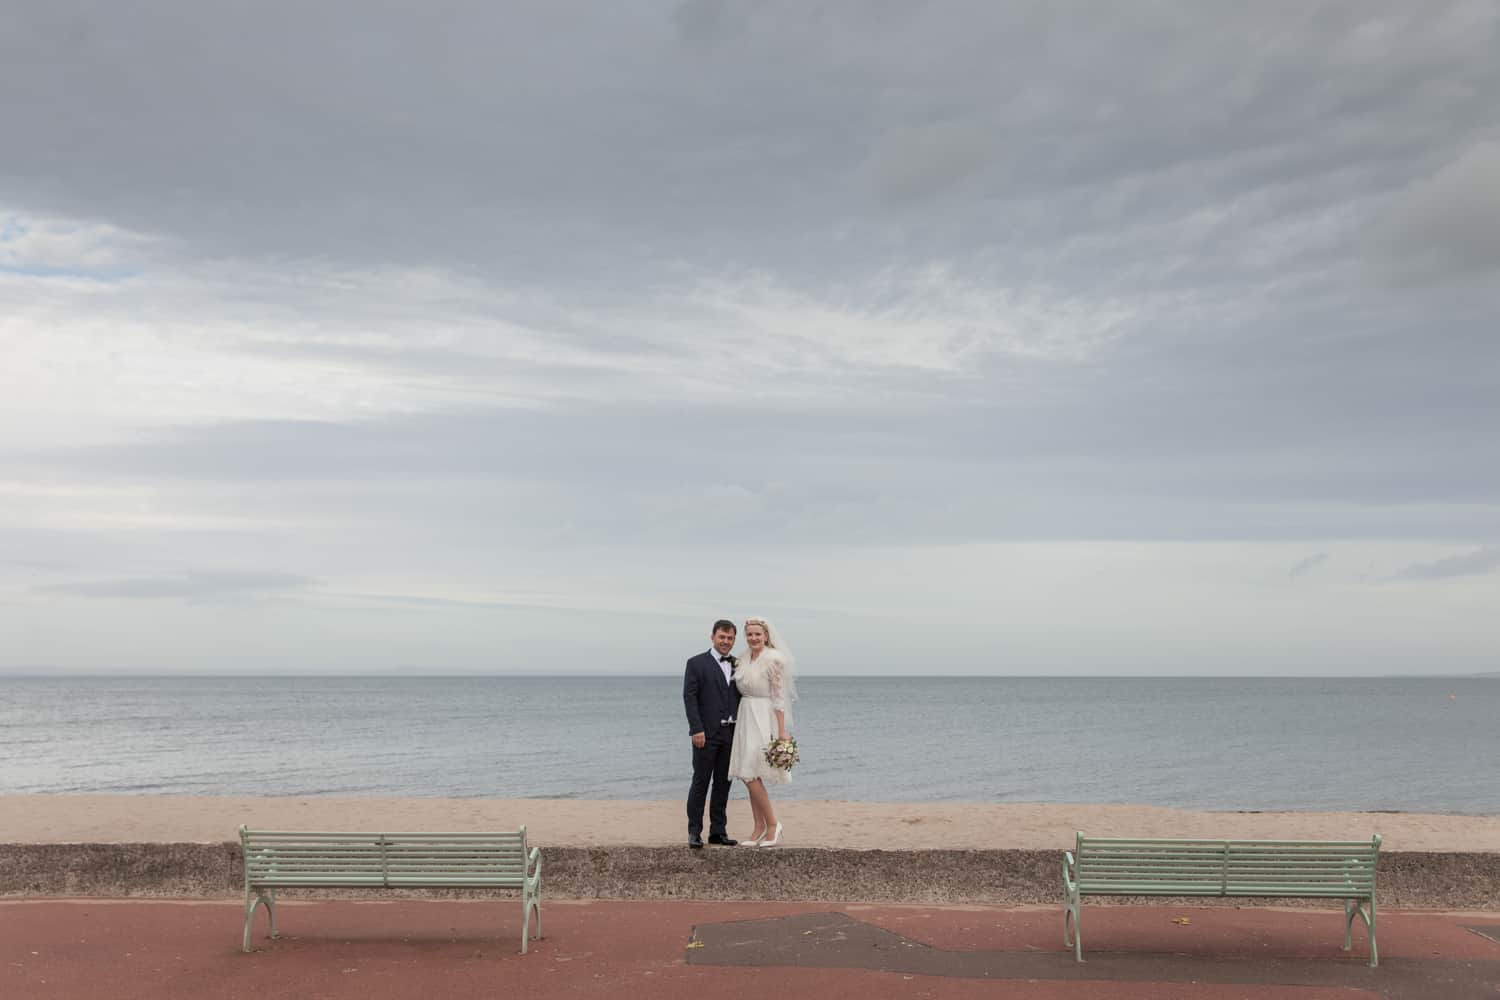 Edinburgh photography locations for proposal photo shoot. Portobello beach